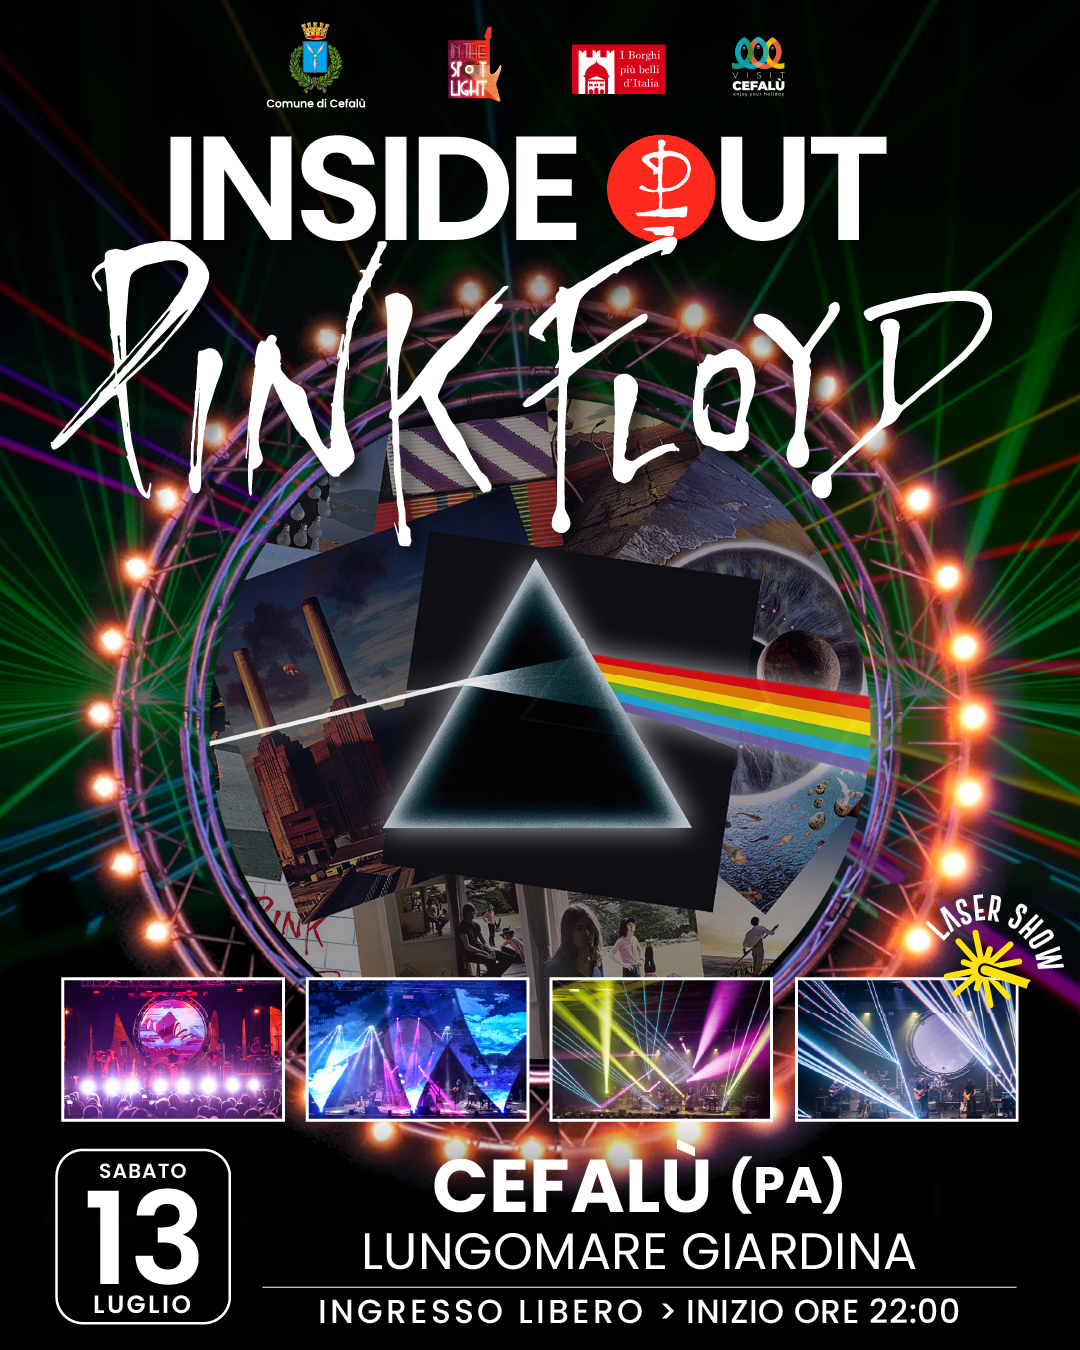 Inside Out Pink Floyd - 13 Luglio - Cefalù (PA)